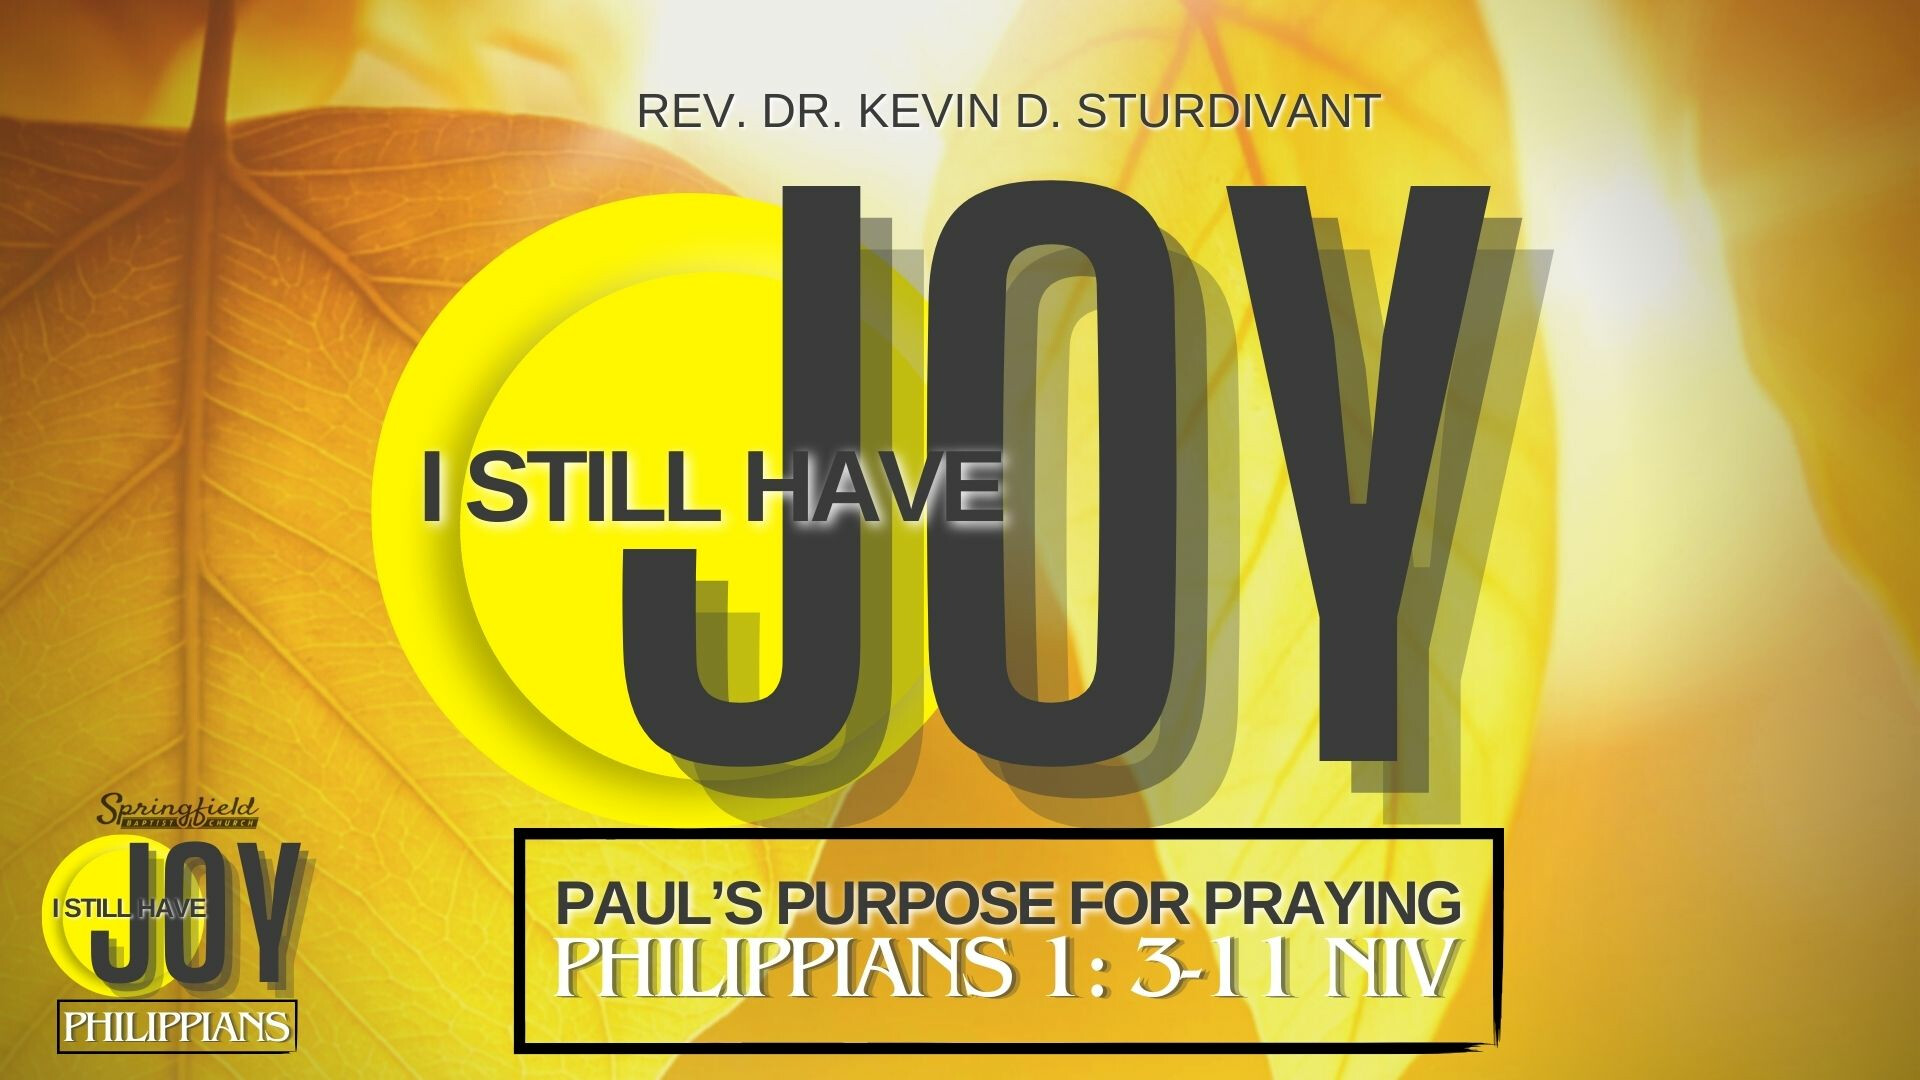 Paul's Purpose for Praying